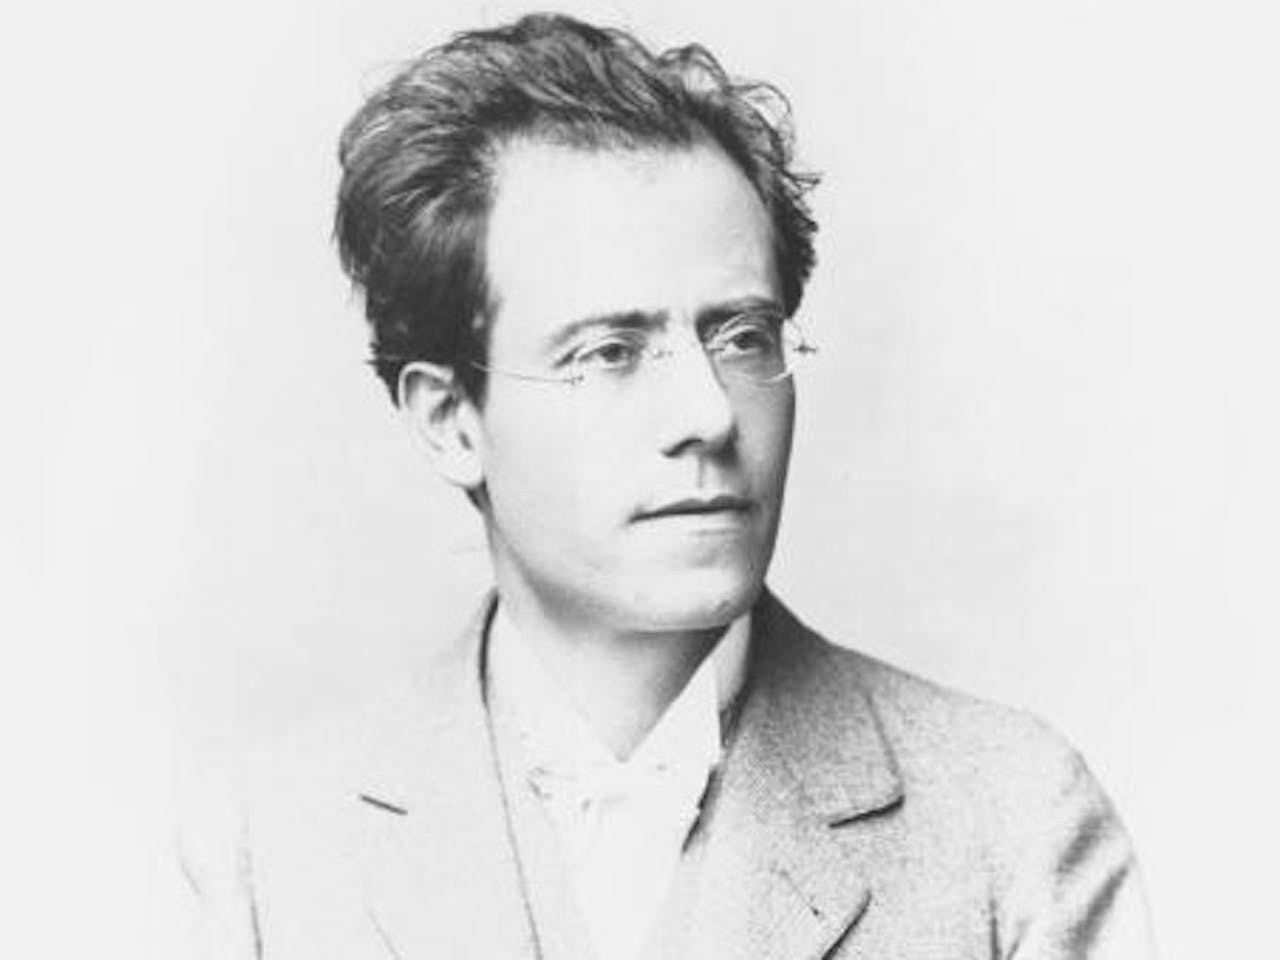 Mahler Gustav von Székely, Public domain, via Wikimedia Commons